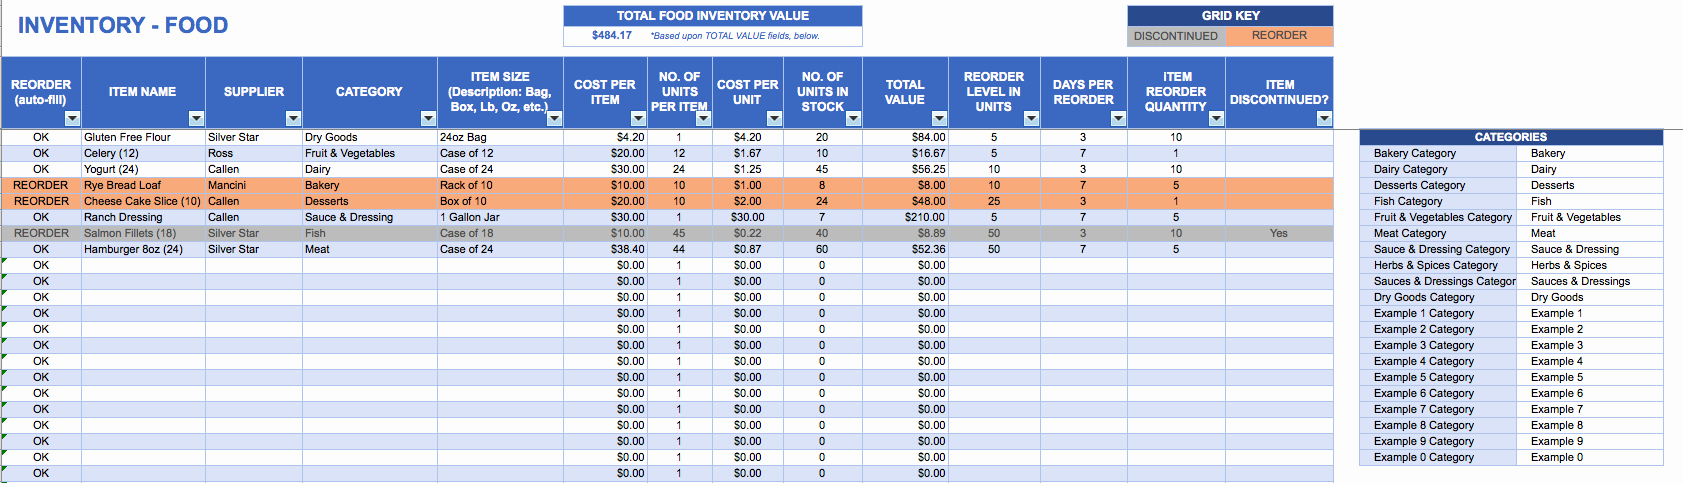 Restaurant Inventory Spreadsheet On Excel Spreadsheet Templates Inside Restaurant Inventory Spreadsheet